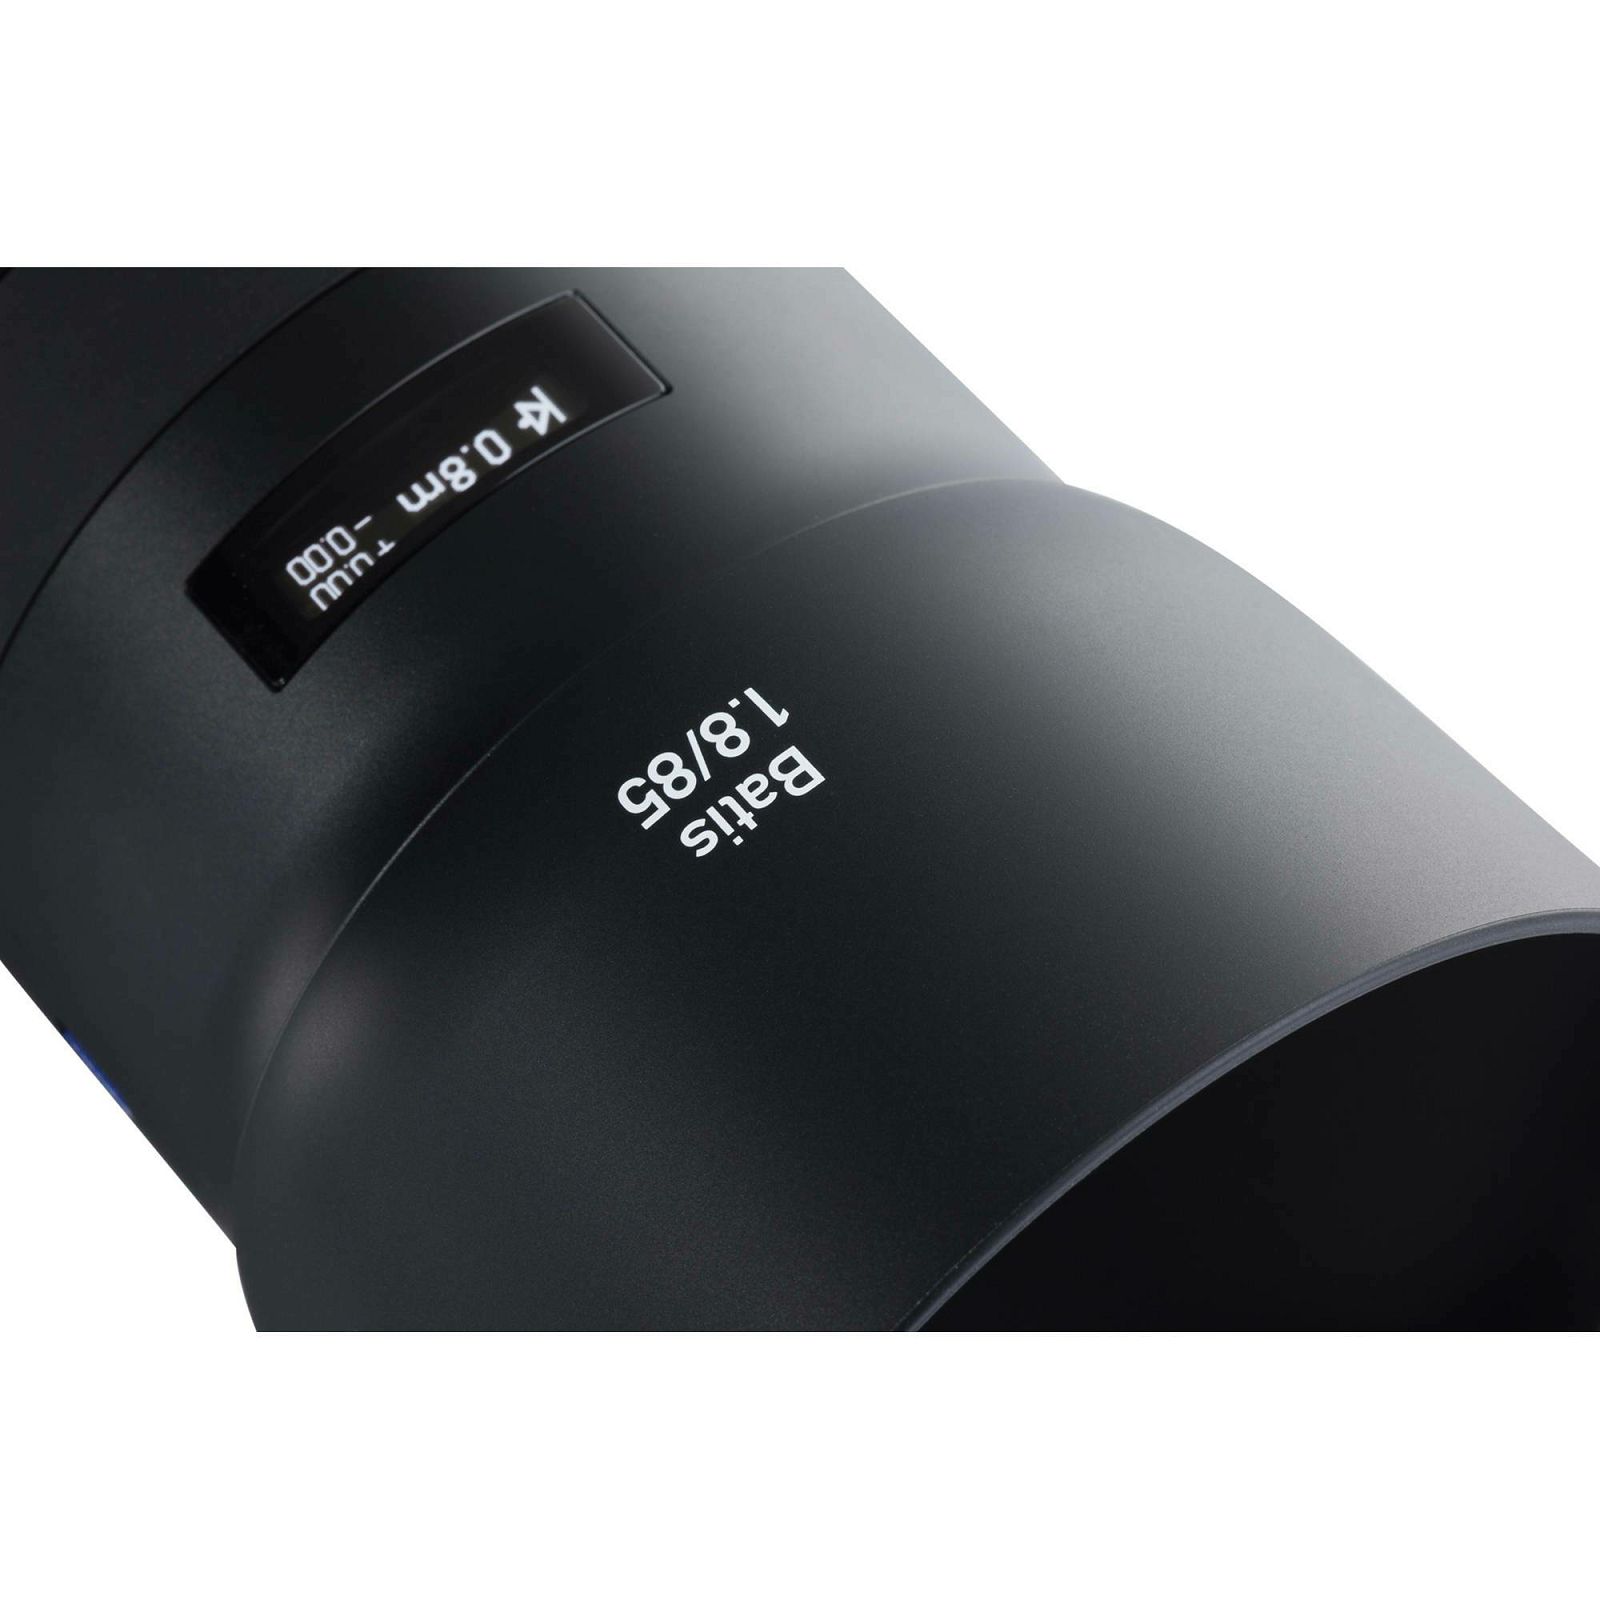 Zeiss Batis 85mm f/1.8 FE portretni telefoto objektiv za Sony E-mount (2103-751)